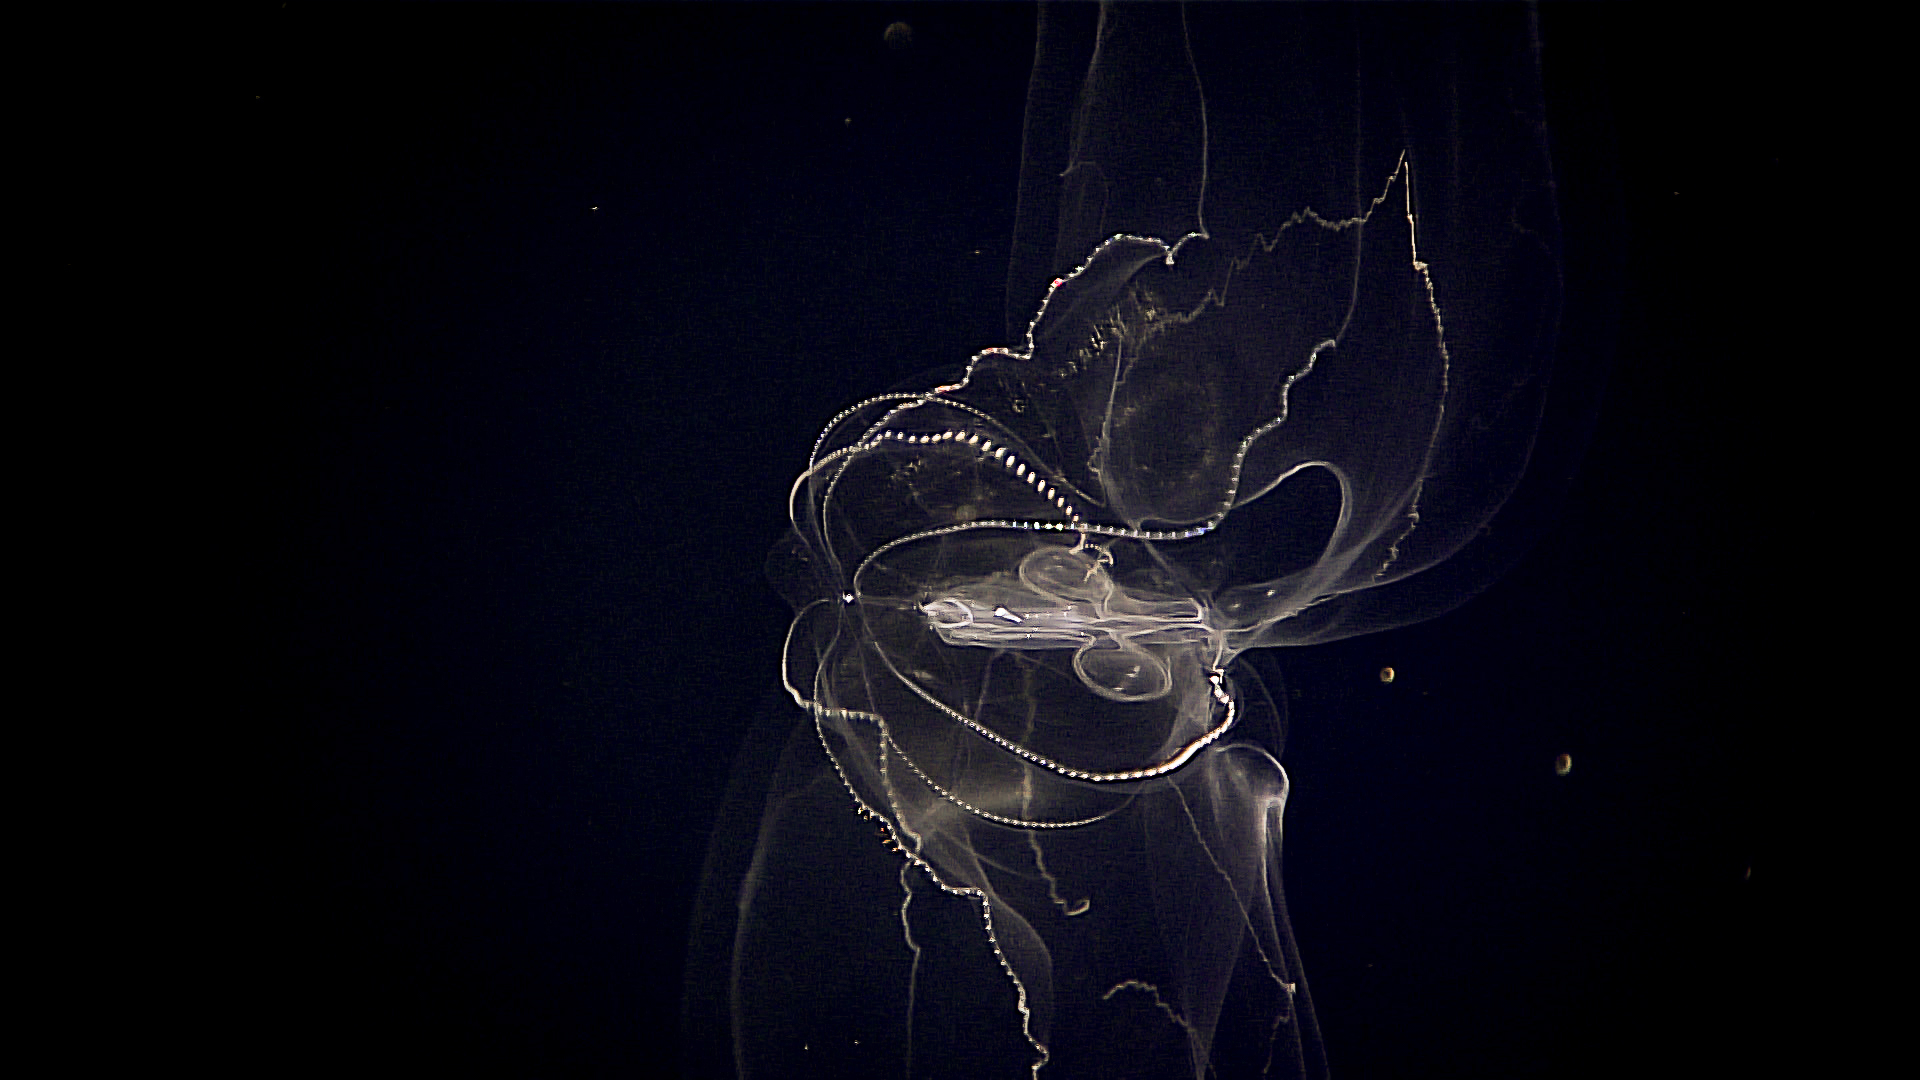 Lobate ctenophore (or comb jelly). (Image: NOAA)